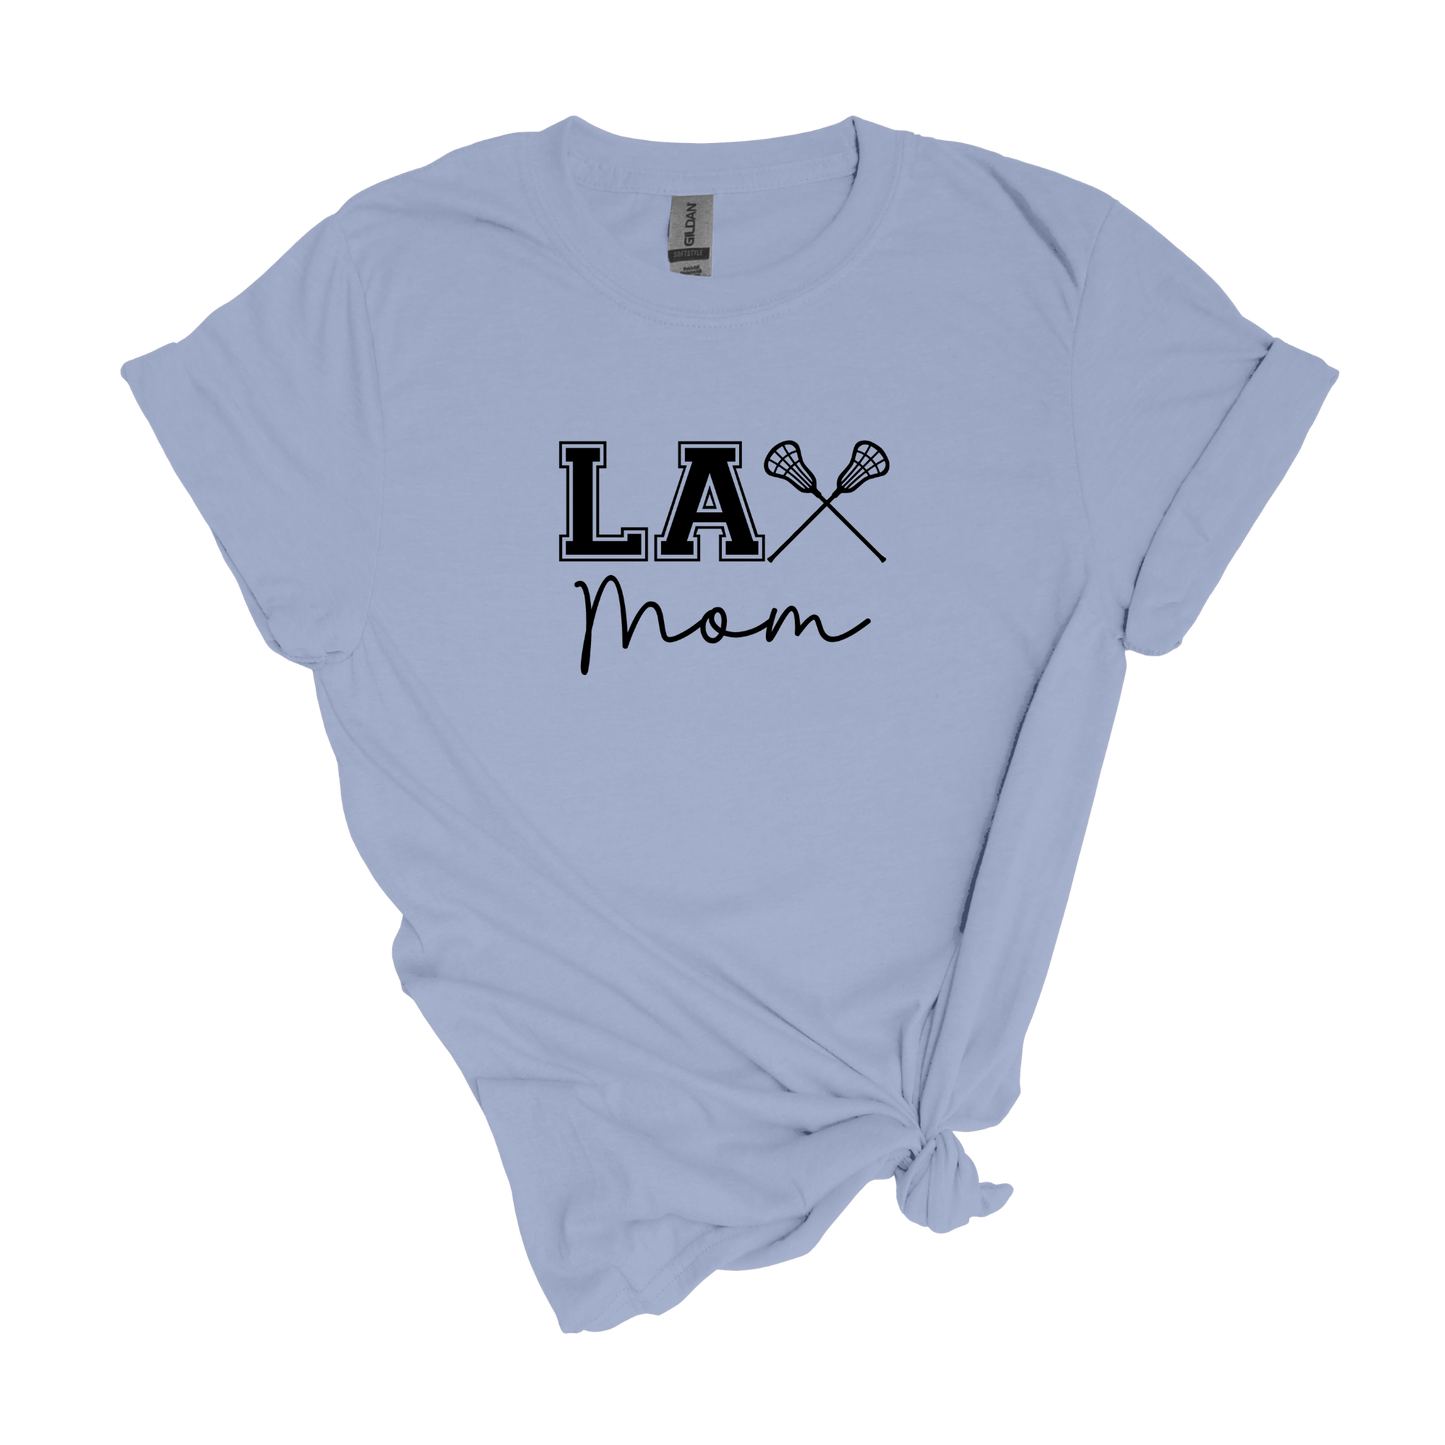 LAX Mom - Adult Unisex Soft T-shirt